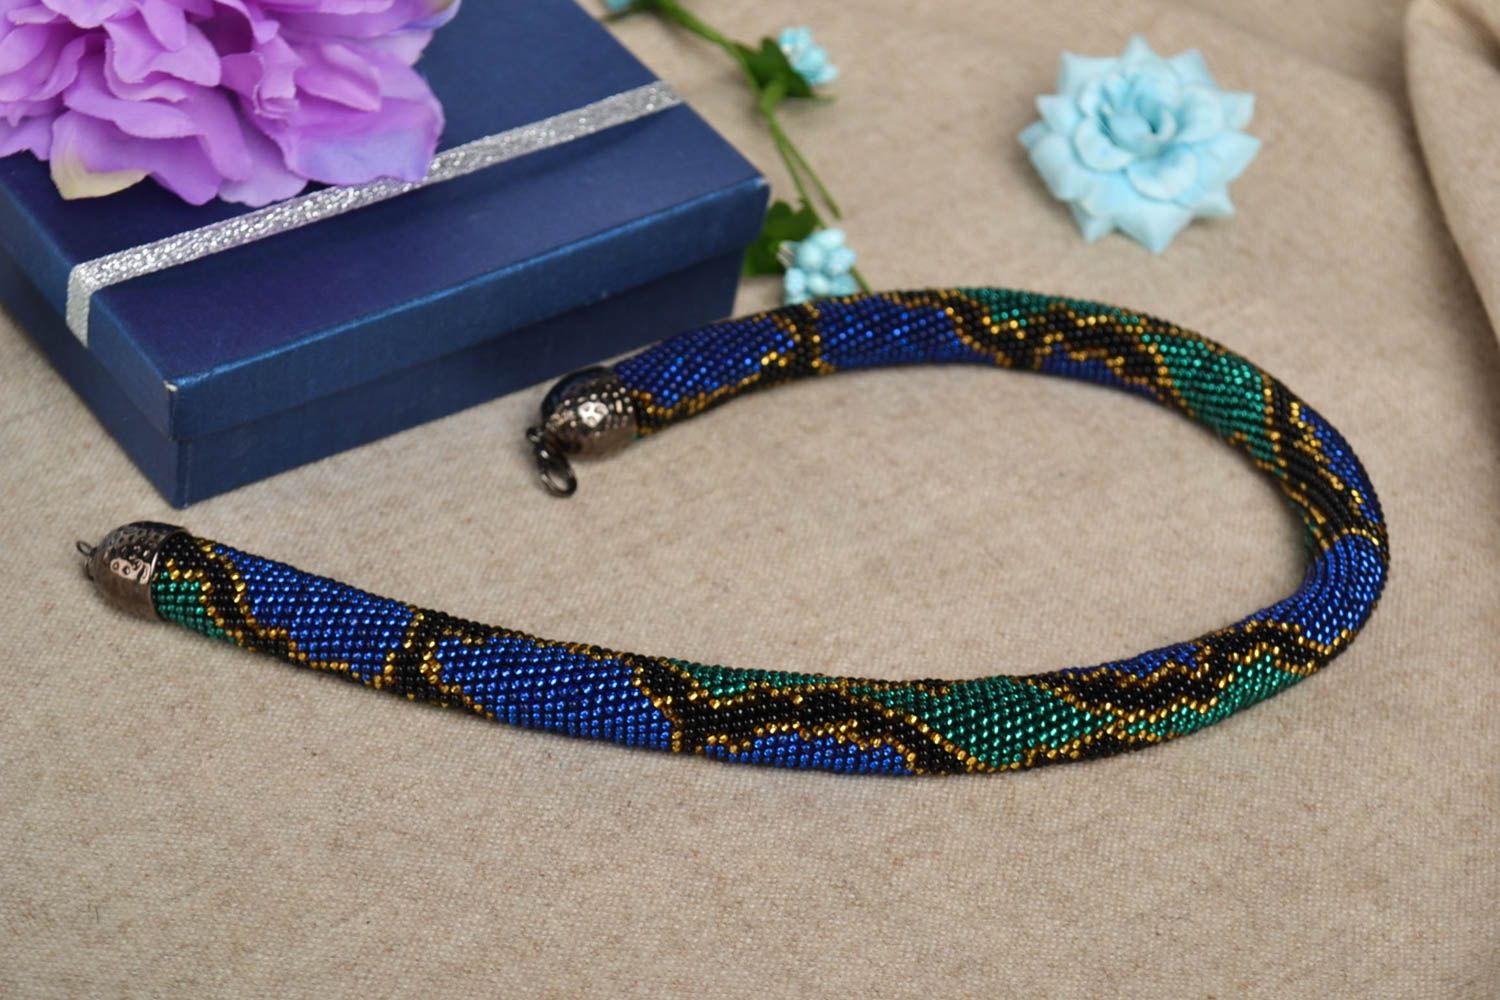 Handmade beaded necklace seed beads jewelry handmade accessories for girls photo 1